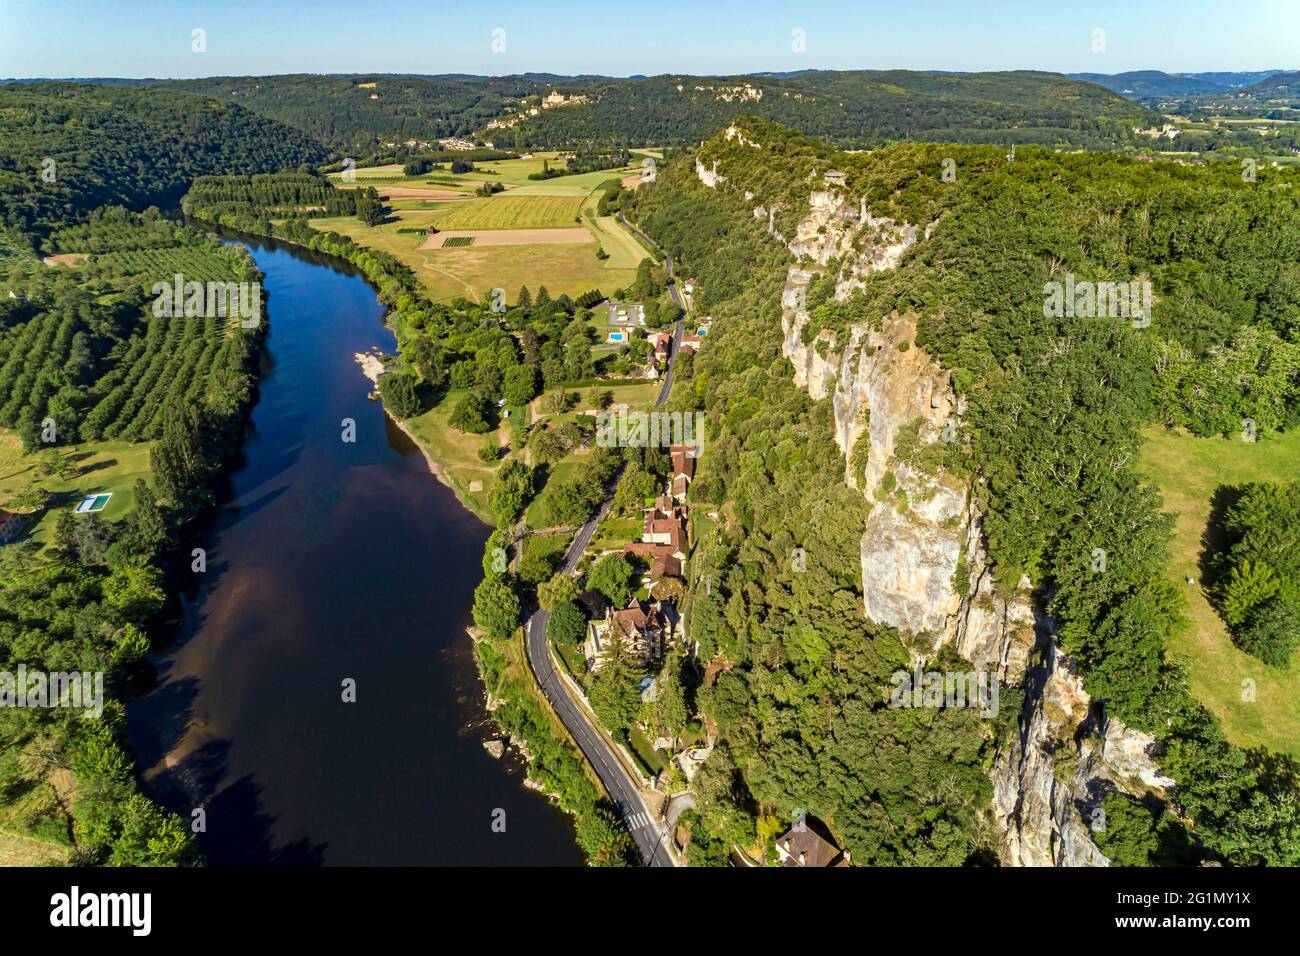 France, Dordogne, Perigord Noir, Dordogne valley, V�zac, Marqueyssac castle, terraced boxwood gardens designed by Le N�tre (aerial view) Stock Photo